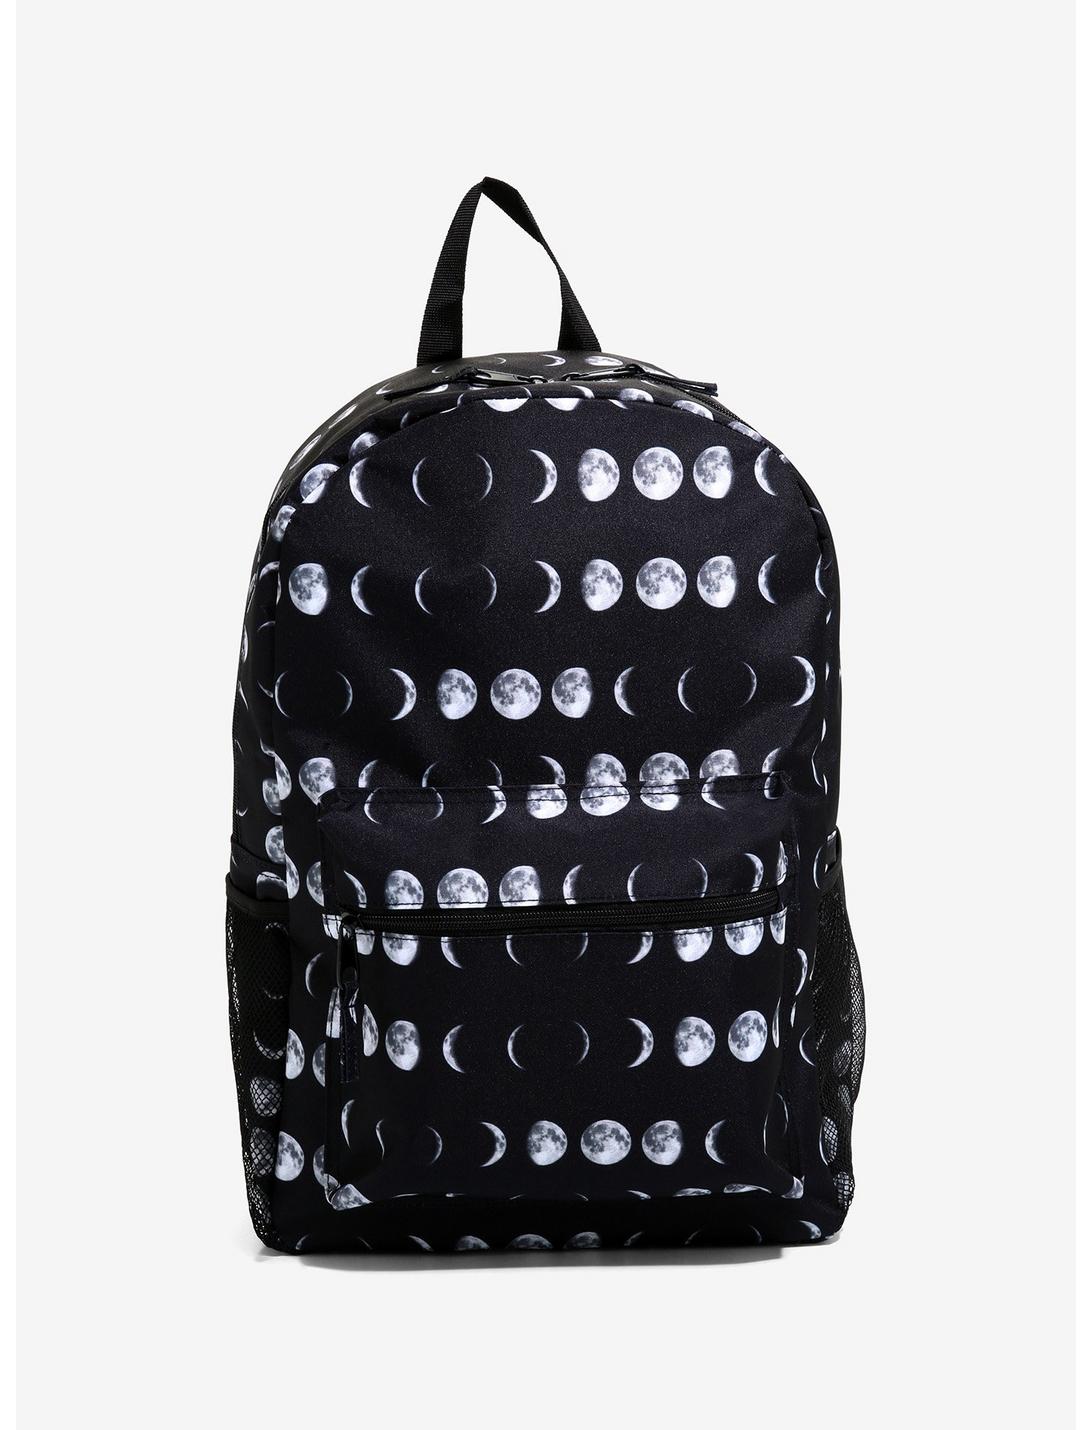 Moon Phases Black & White Backpack, , hi-res